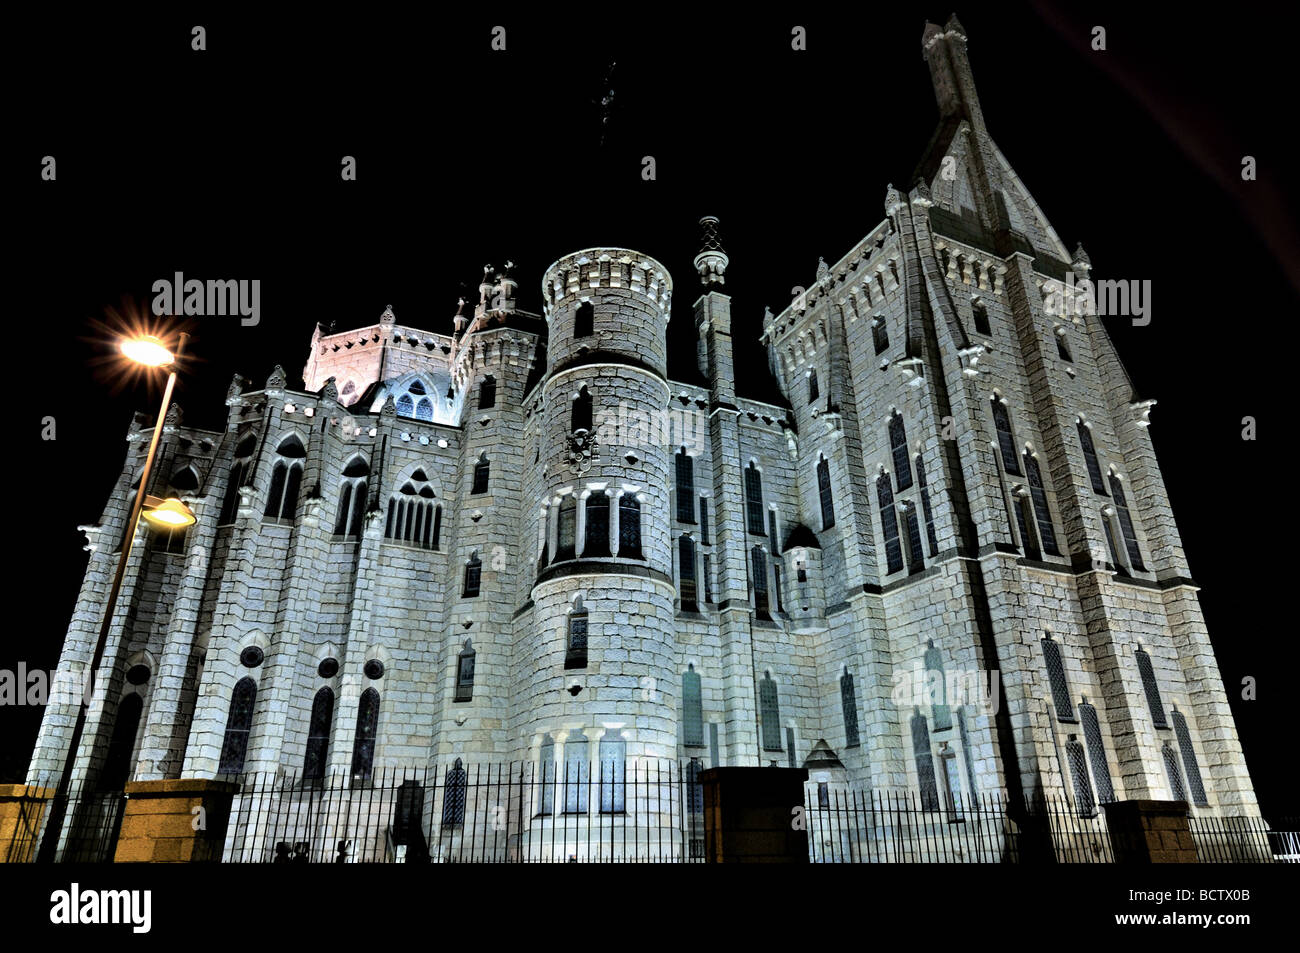 Spain, Astorga: Nocturnal iluminated Bishops Palace of Antonio Gaudí Stock Photo